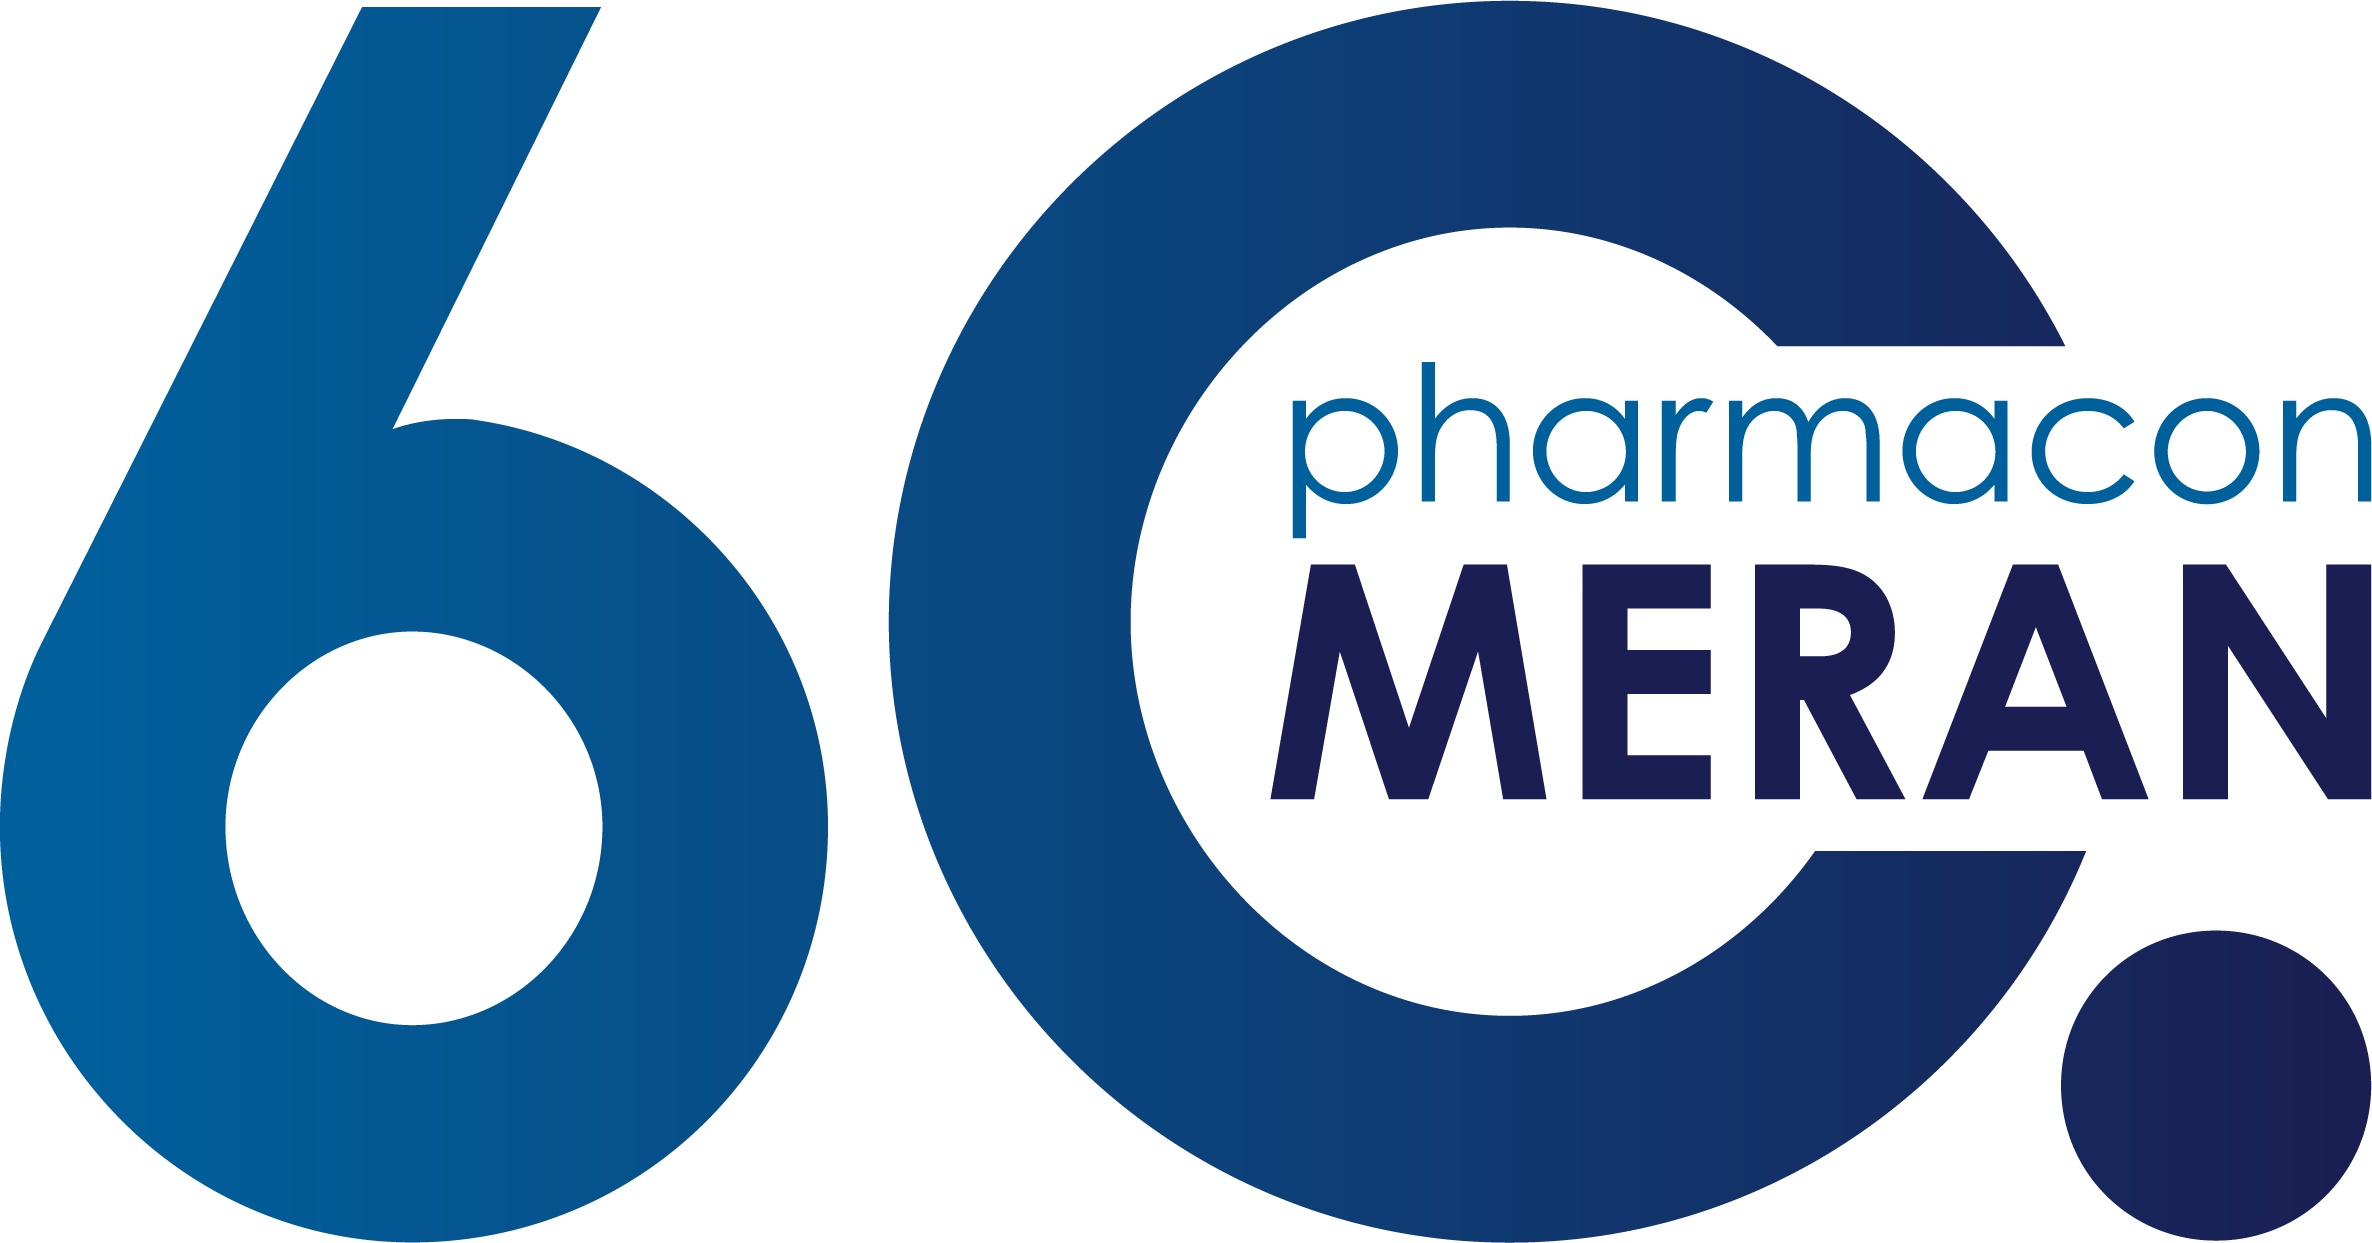 60 Jahre pharmacon Meran